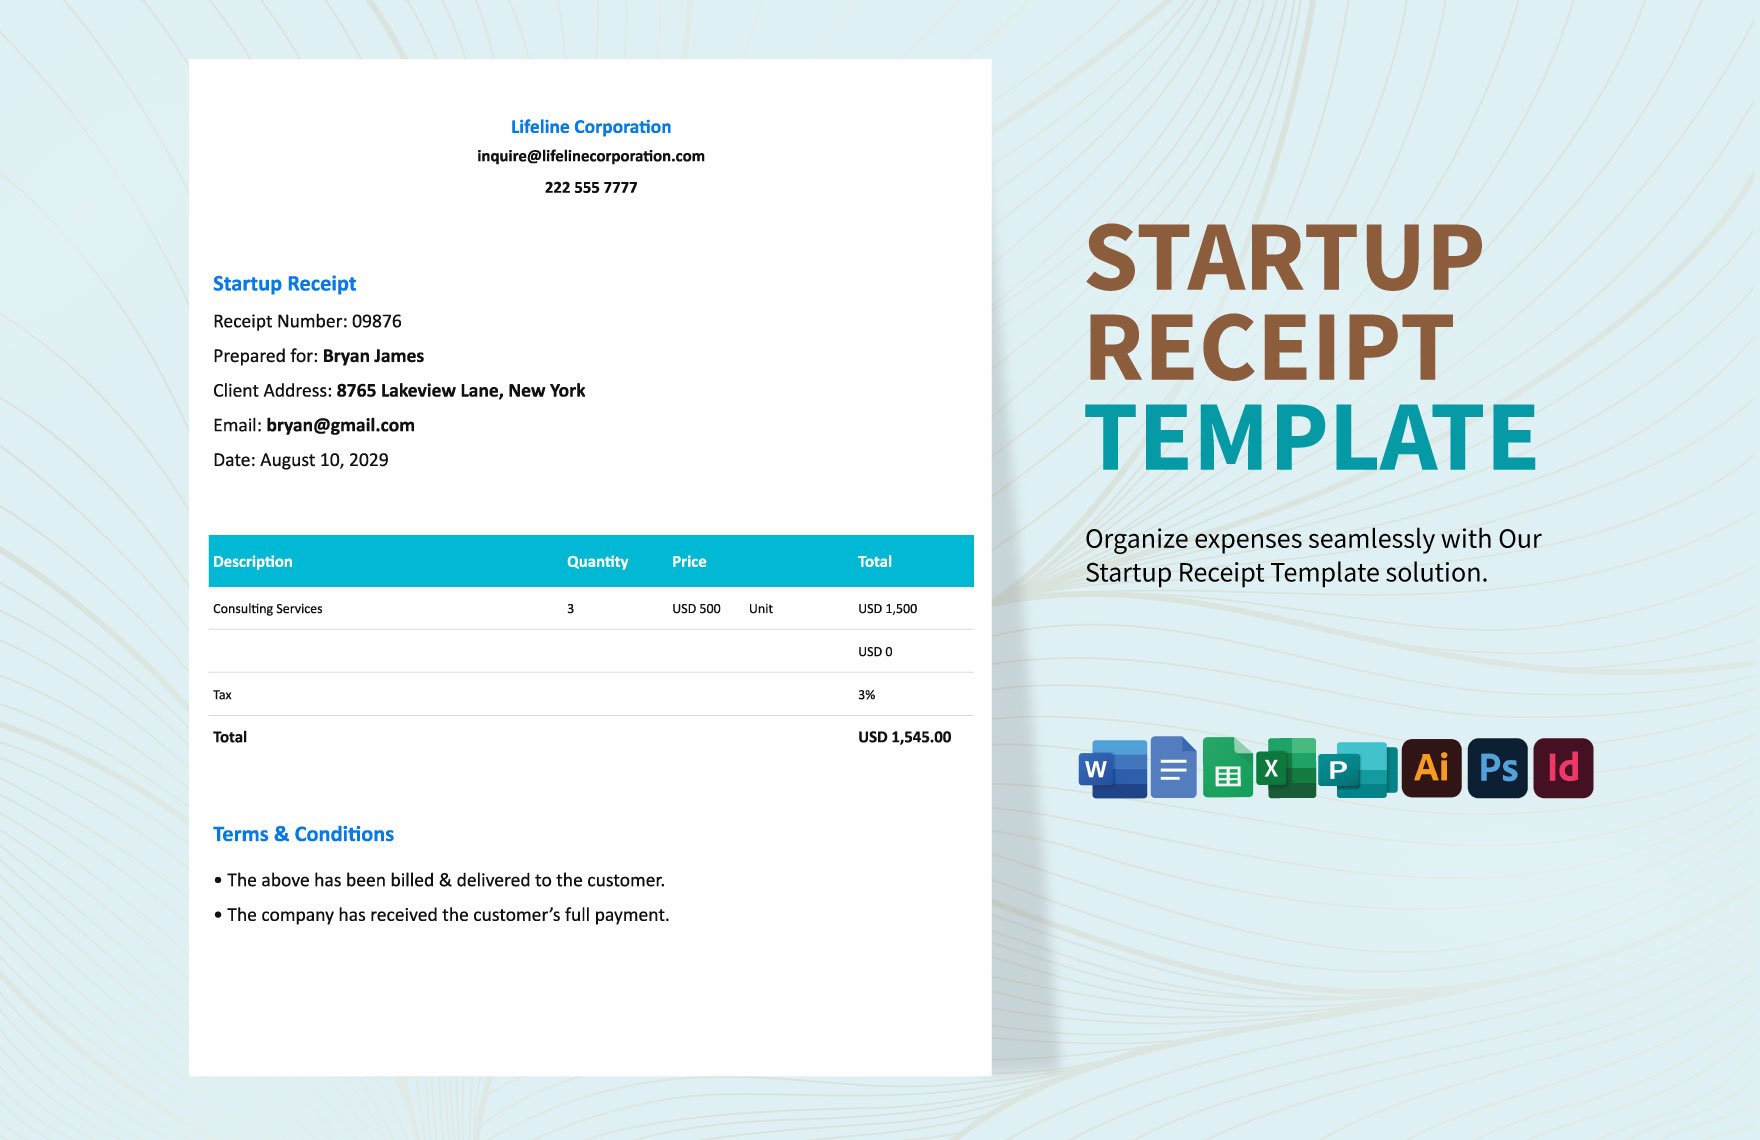 Startup Receipt Template in Word, Google Docs, Excel, Google Sheets, Illustrator, PSD, Publisher, InDesign